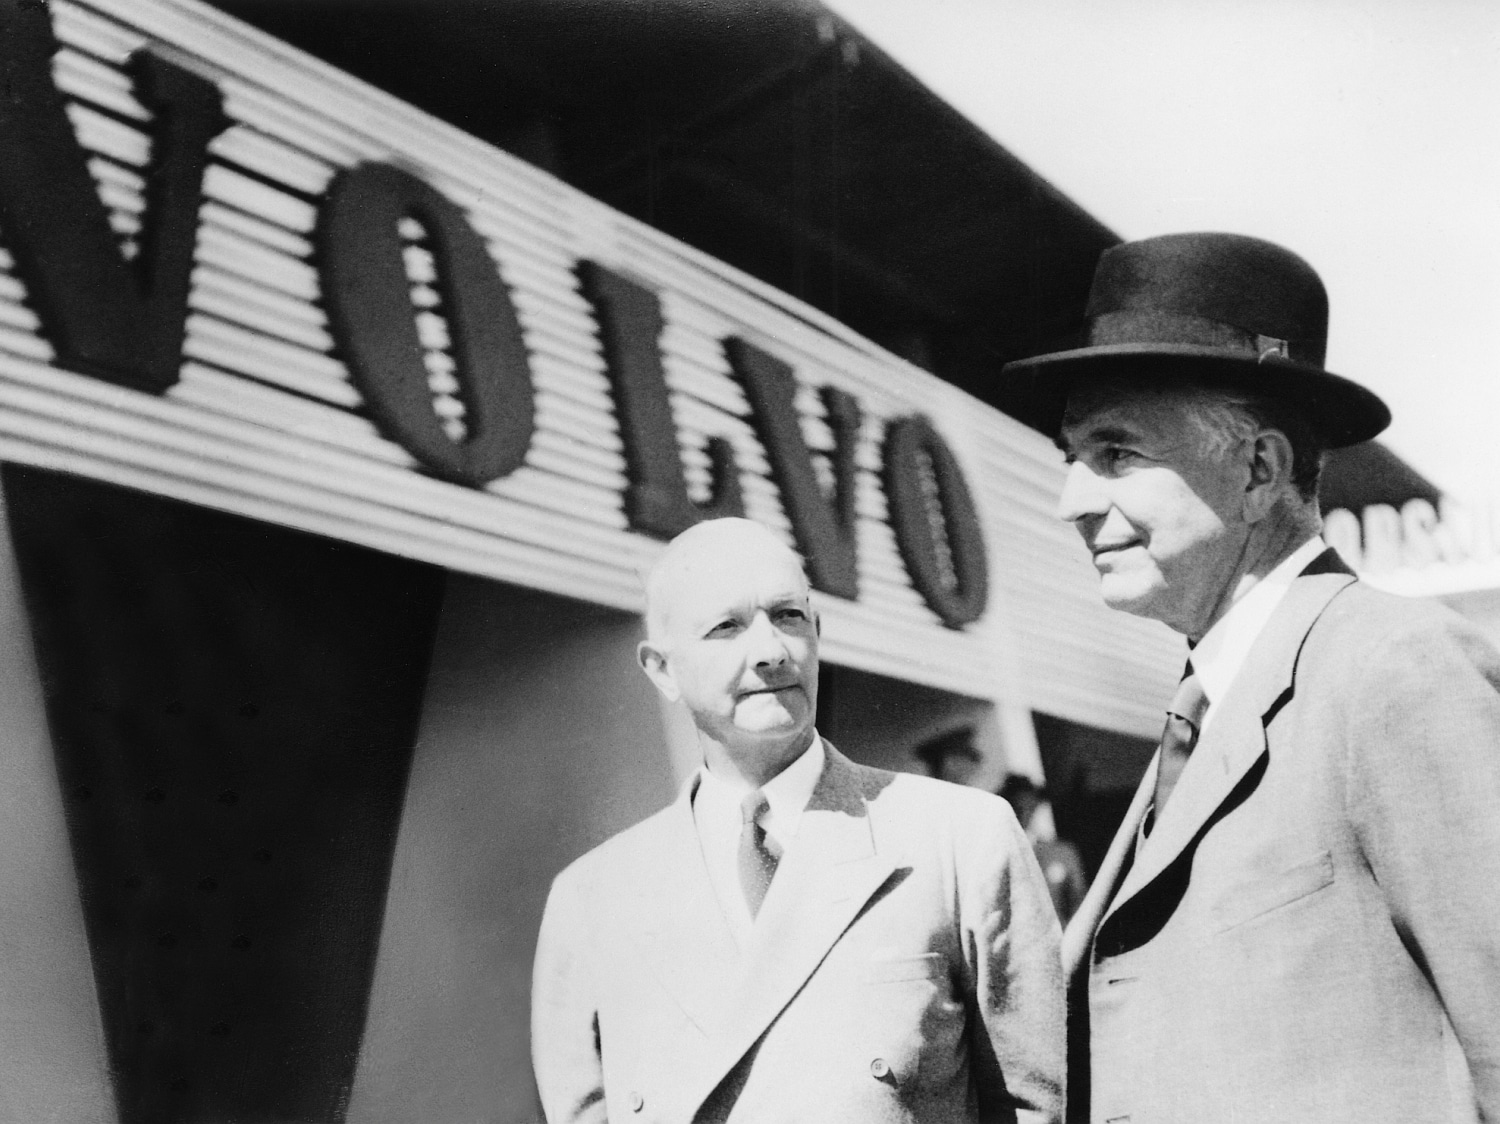 A vintage shot of two gentlemen standing beside a VOLVO signboard.